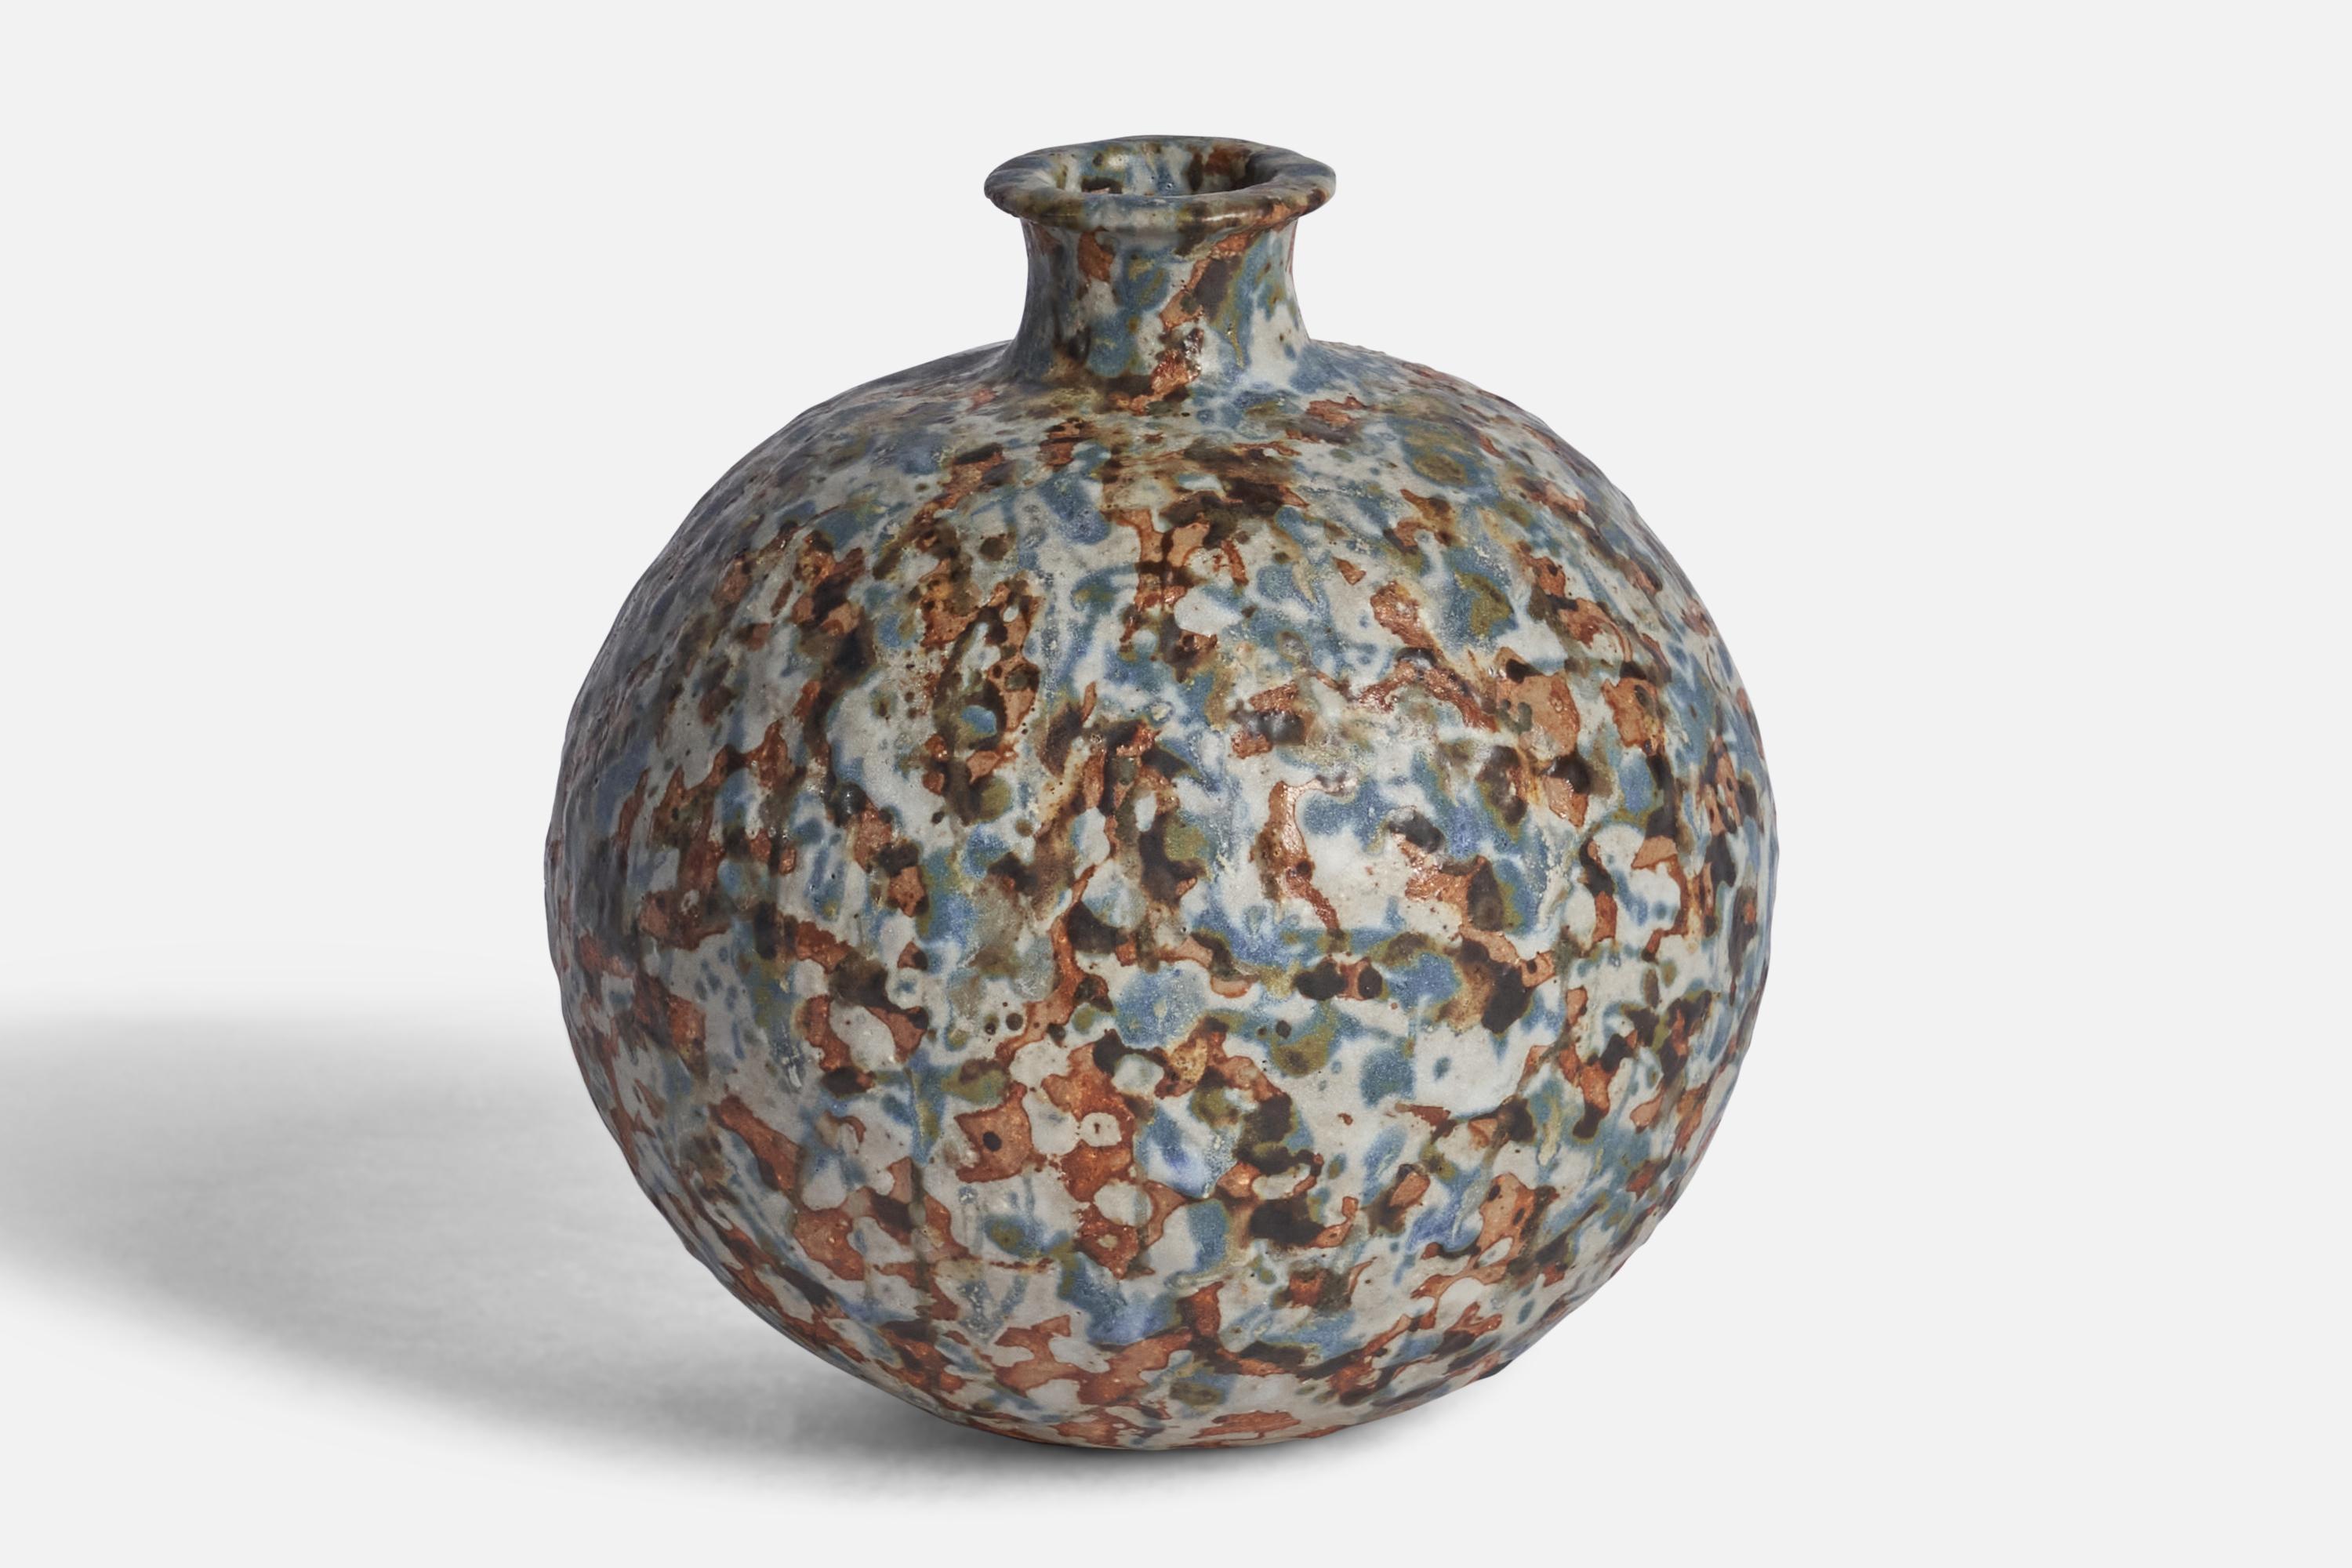 A blue white and brown-glazed stoneware vase designed and produced by Birgitta Tilander, Rapallo, Italy, c. 1970s
“Birgitta tillander” on bottom